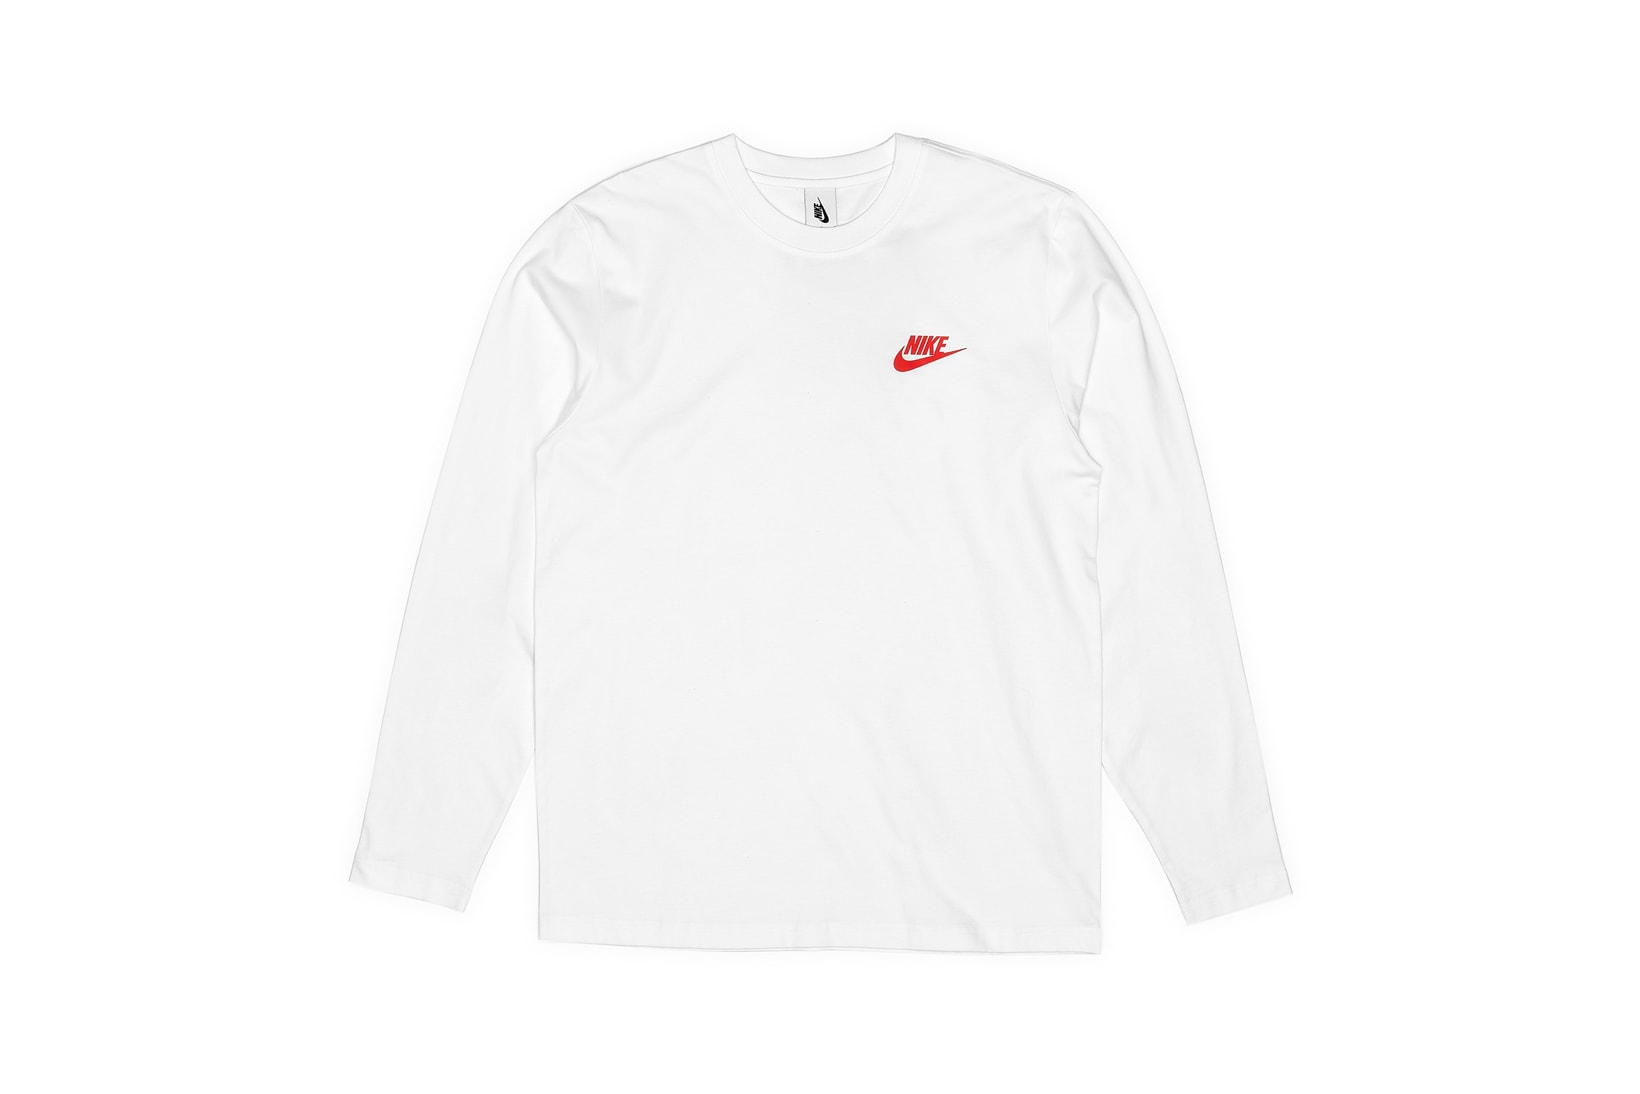 Nike x Dover Street Market Just Do It Long Sleeve T-shirt White